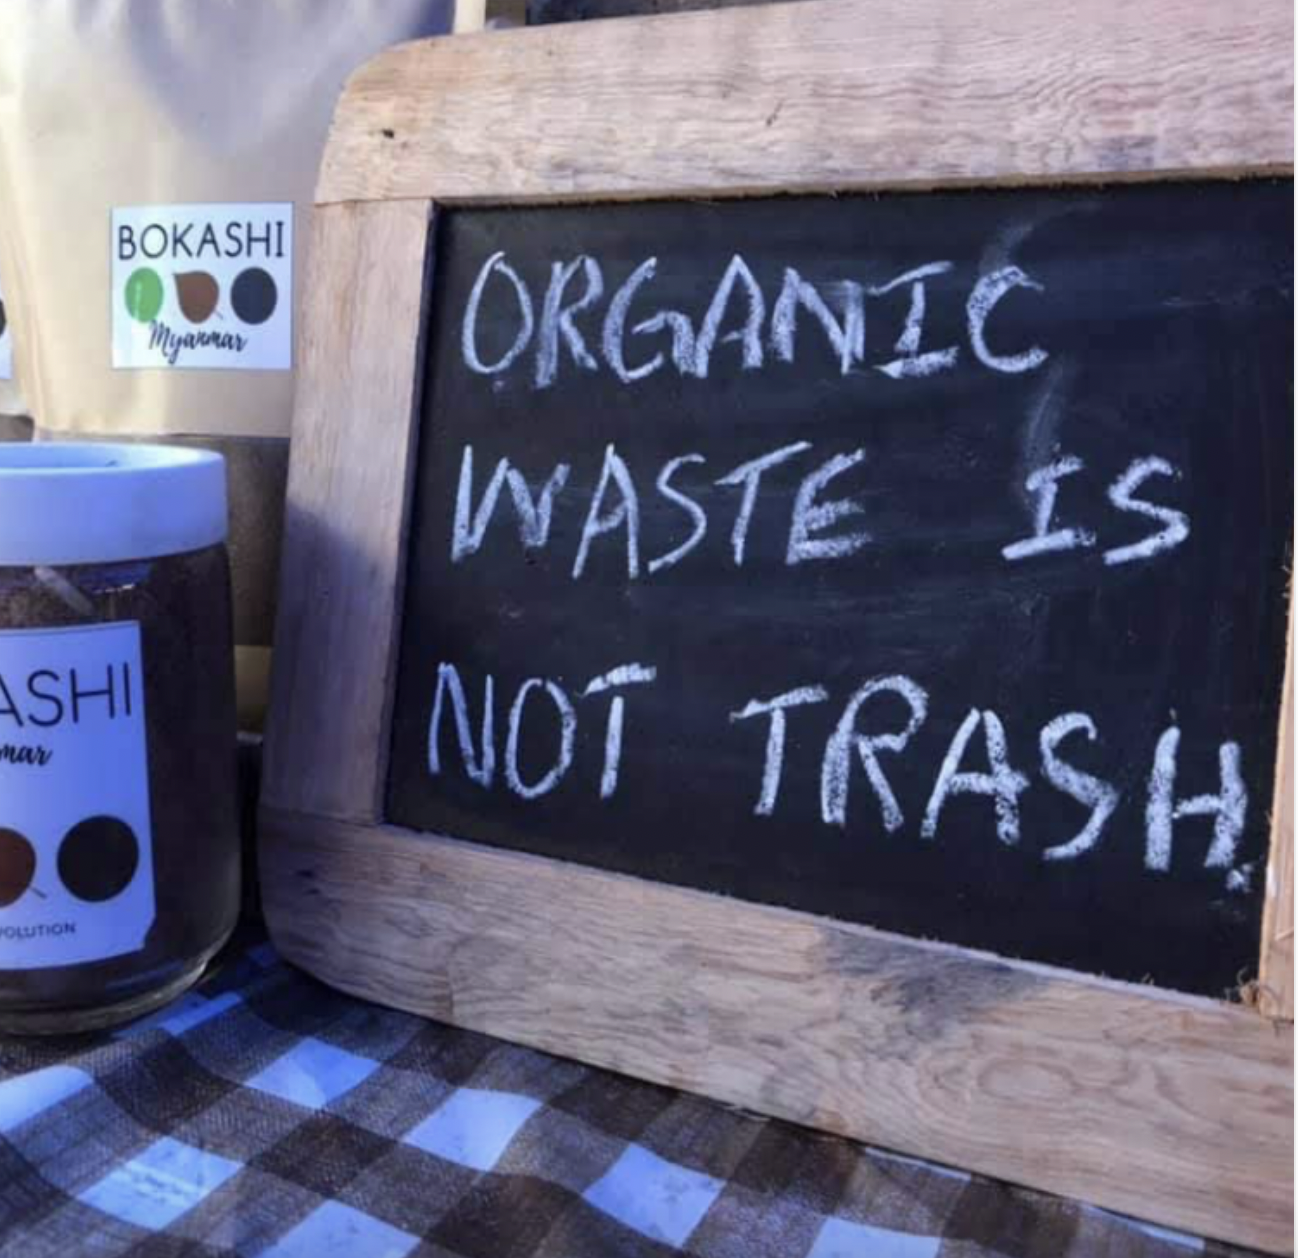 Bokashi turns trash into composting treasure in Myanmar.